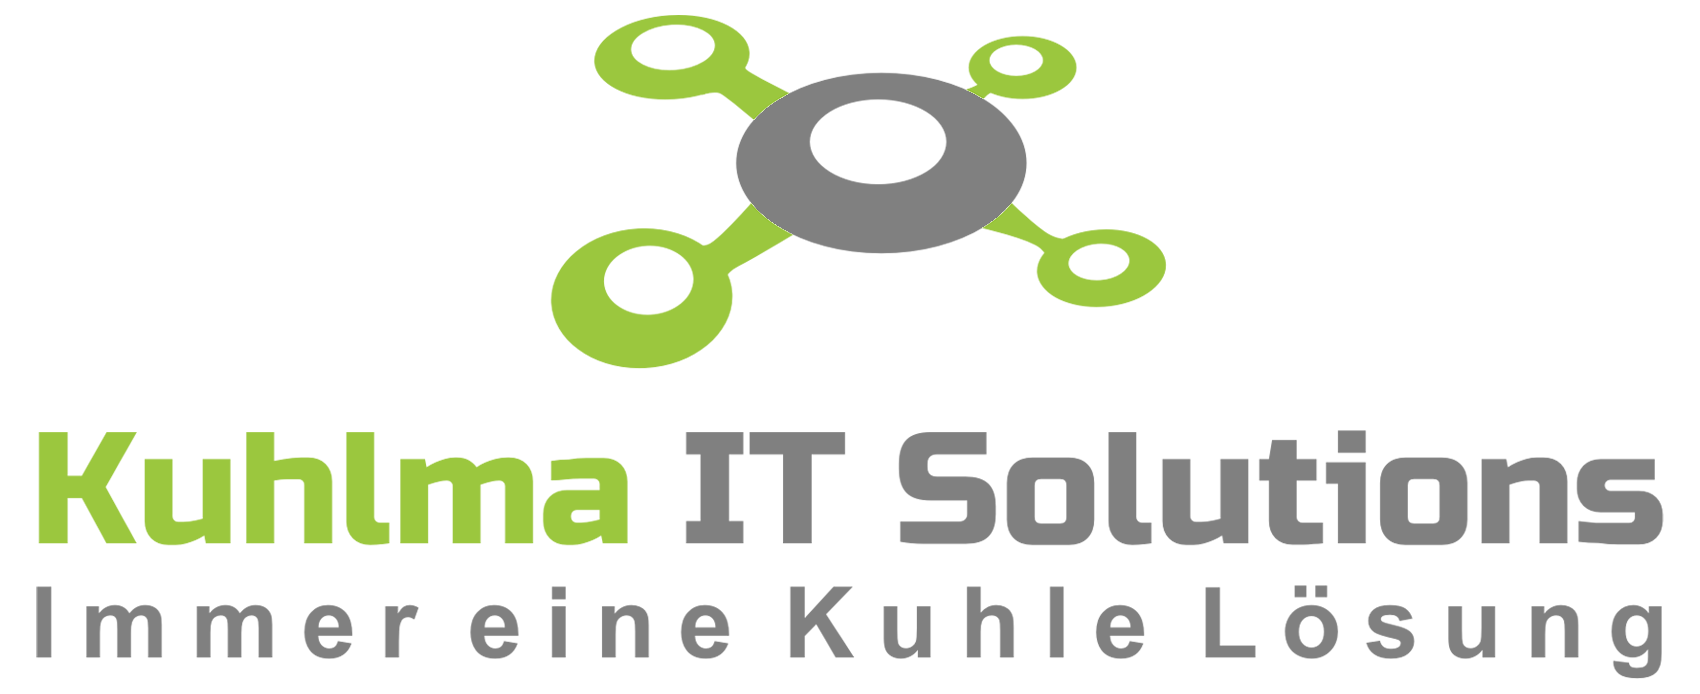 Kuhlma IT Solutions Logo